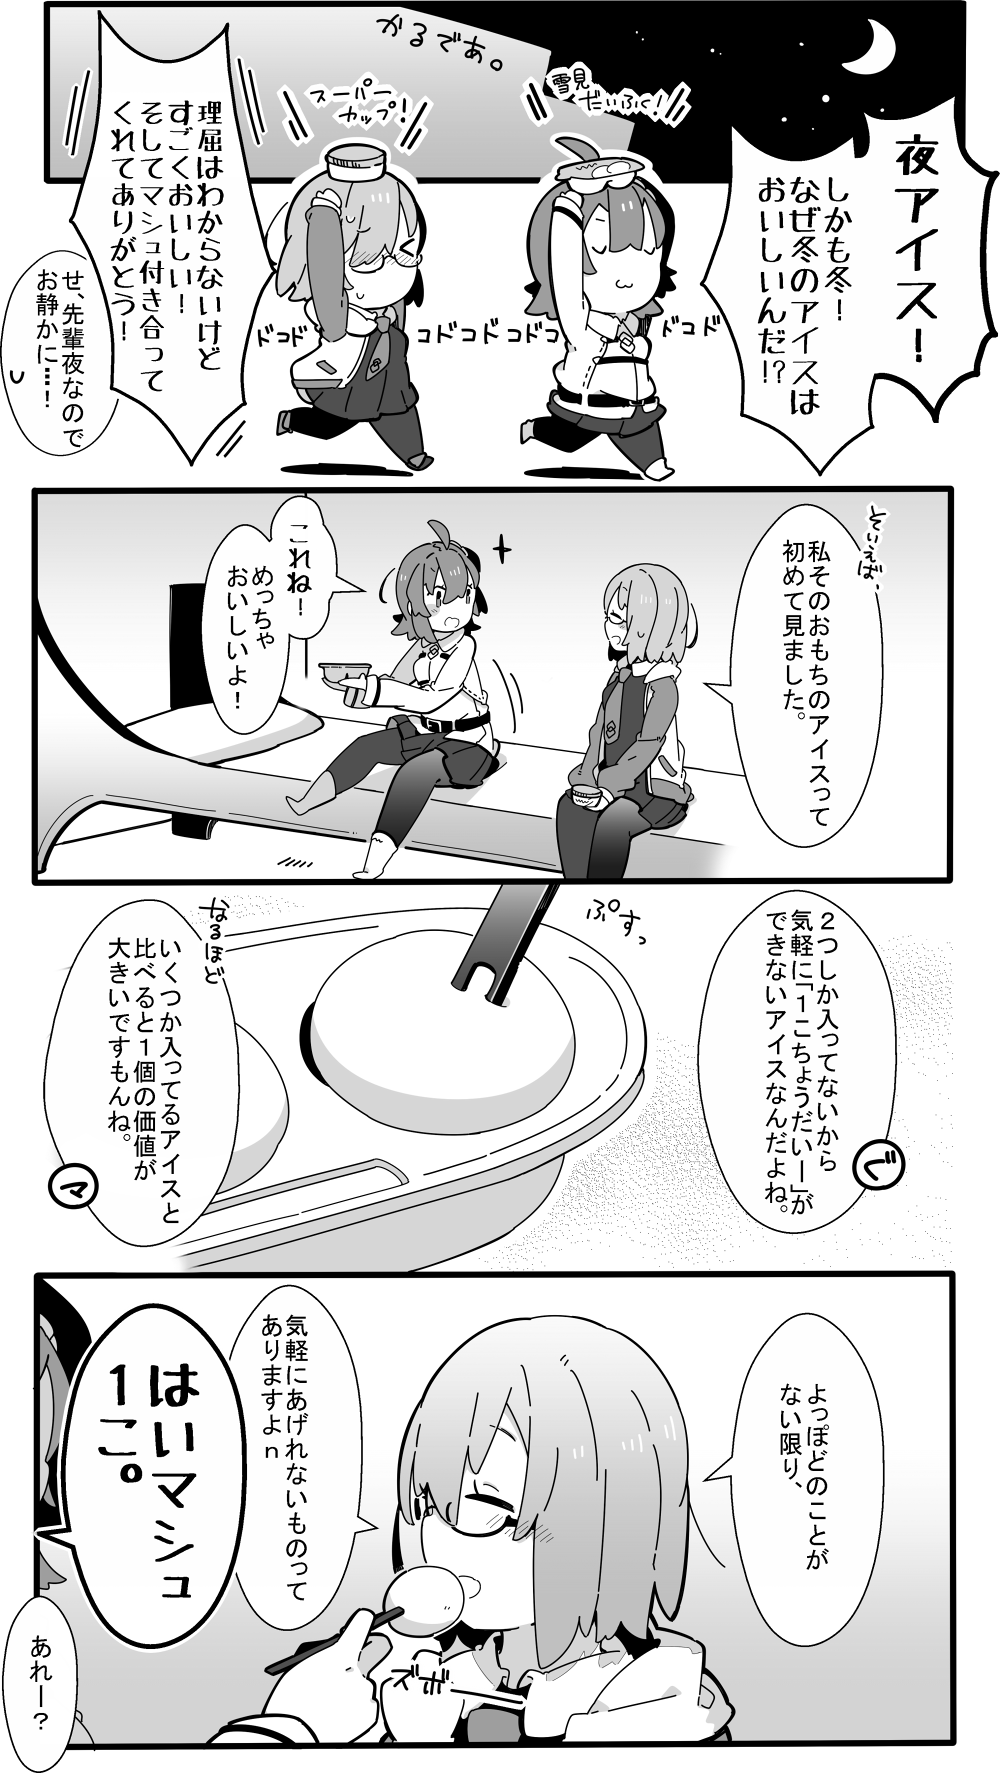 mash kyrielight and fujimaru ritsuka (fate and 1 more) drawn by pekeko ...